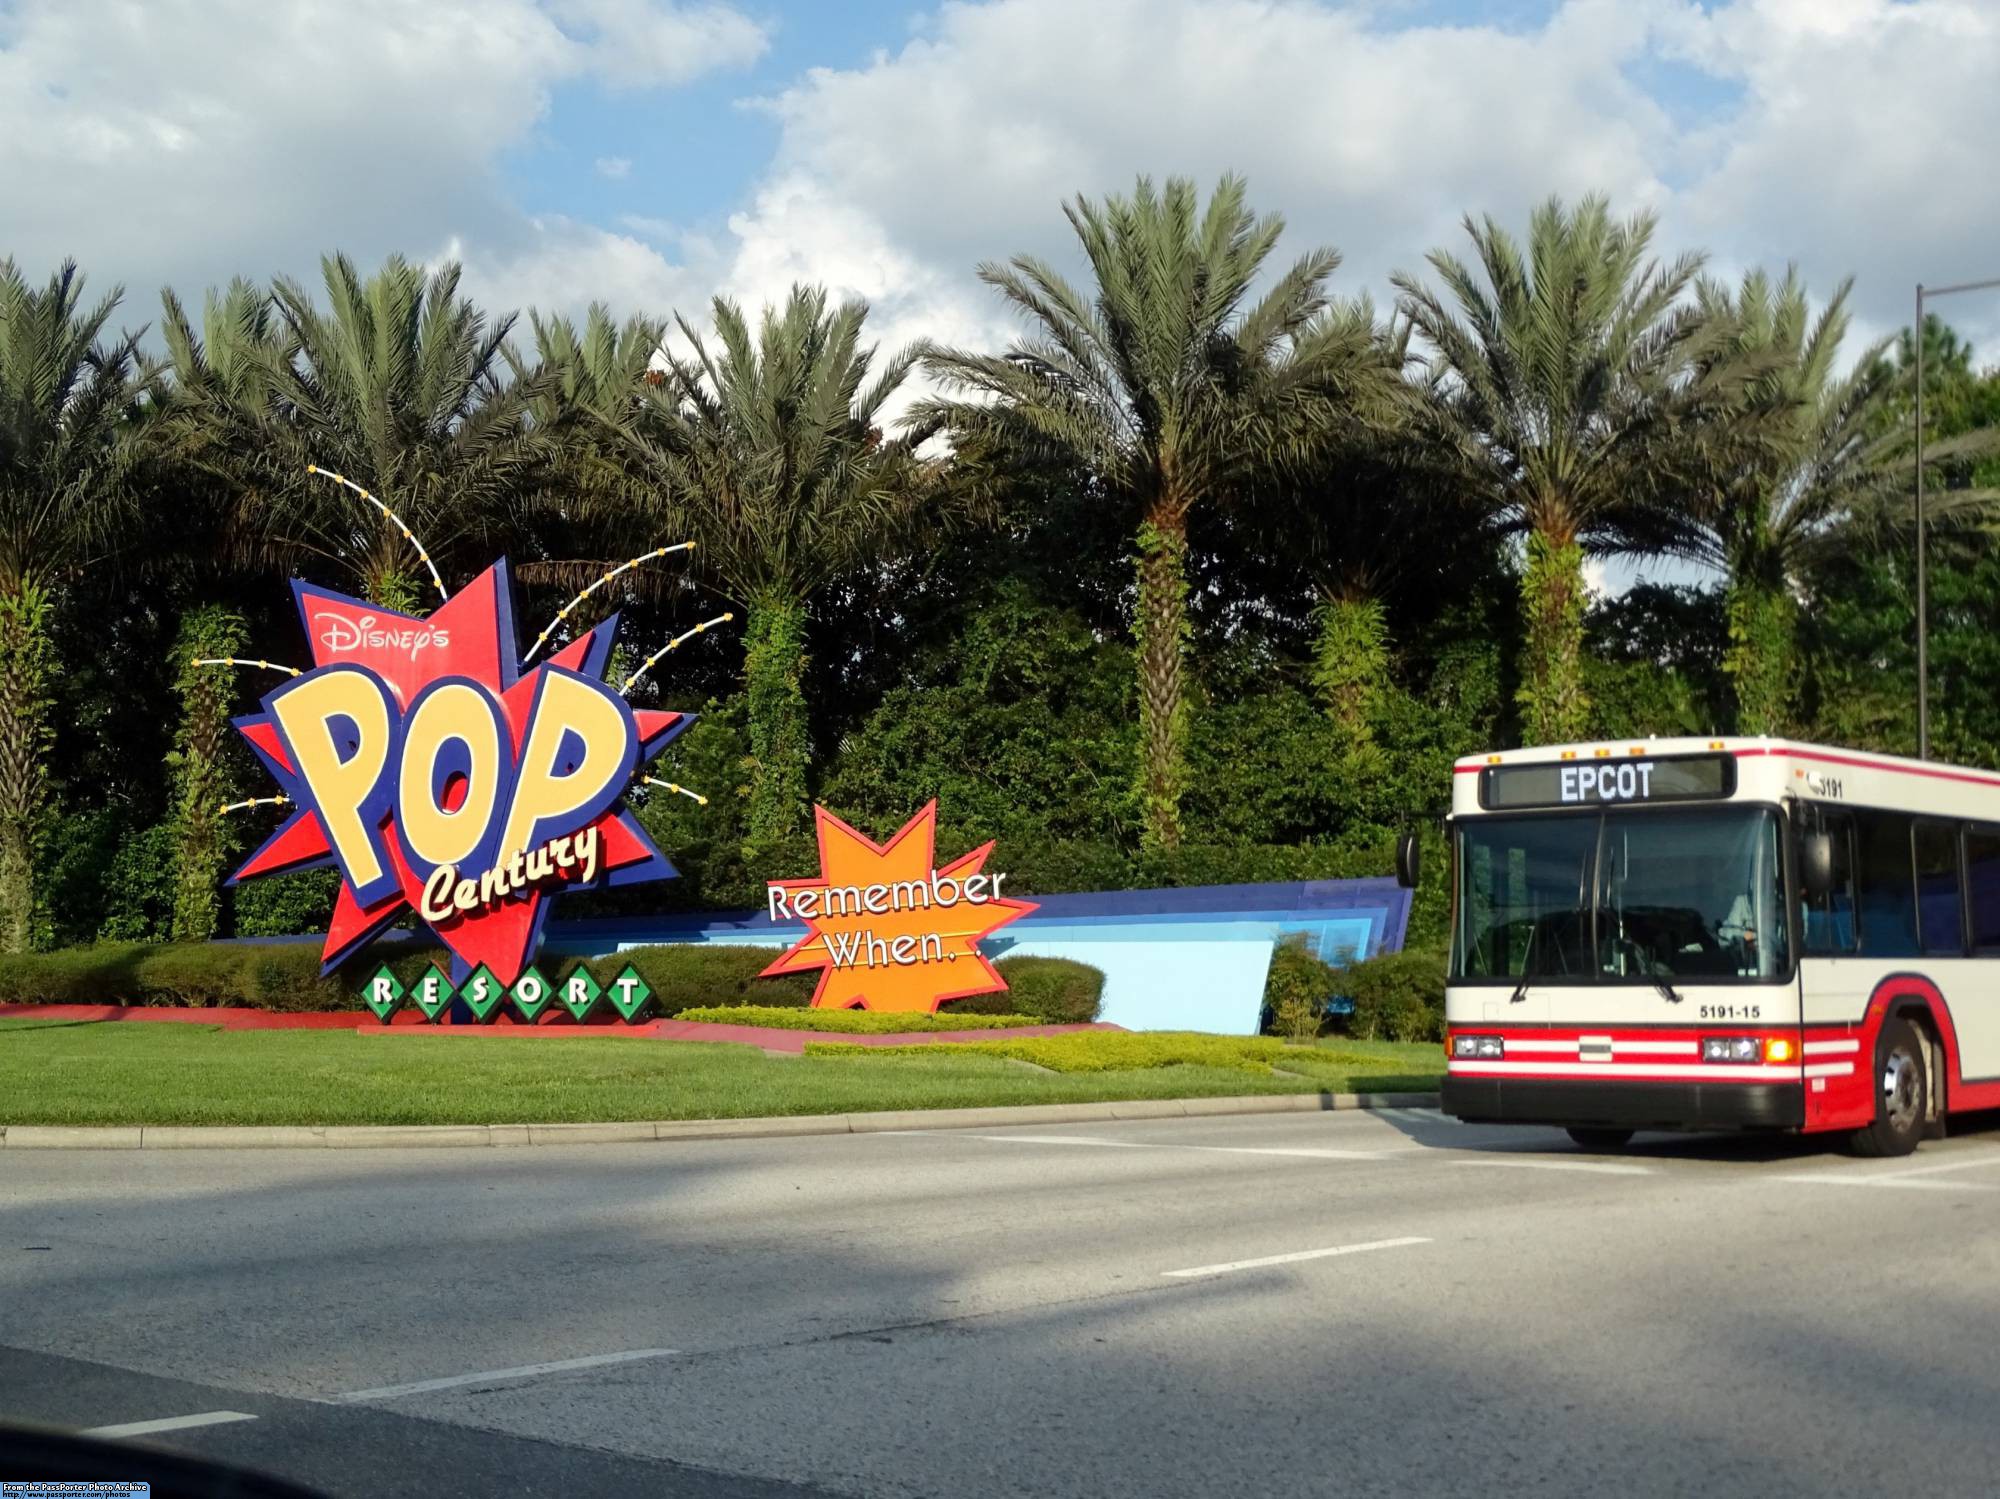 Enjoy a stay at Disney's Pop Century Resort | PassPorter.com